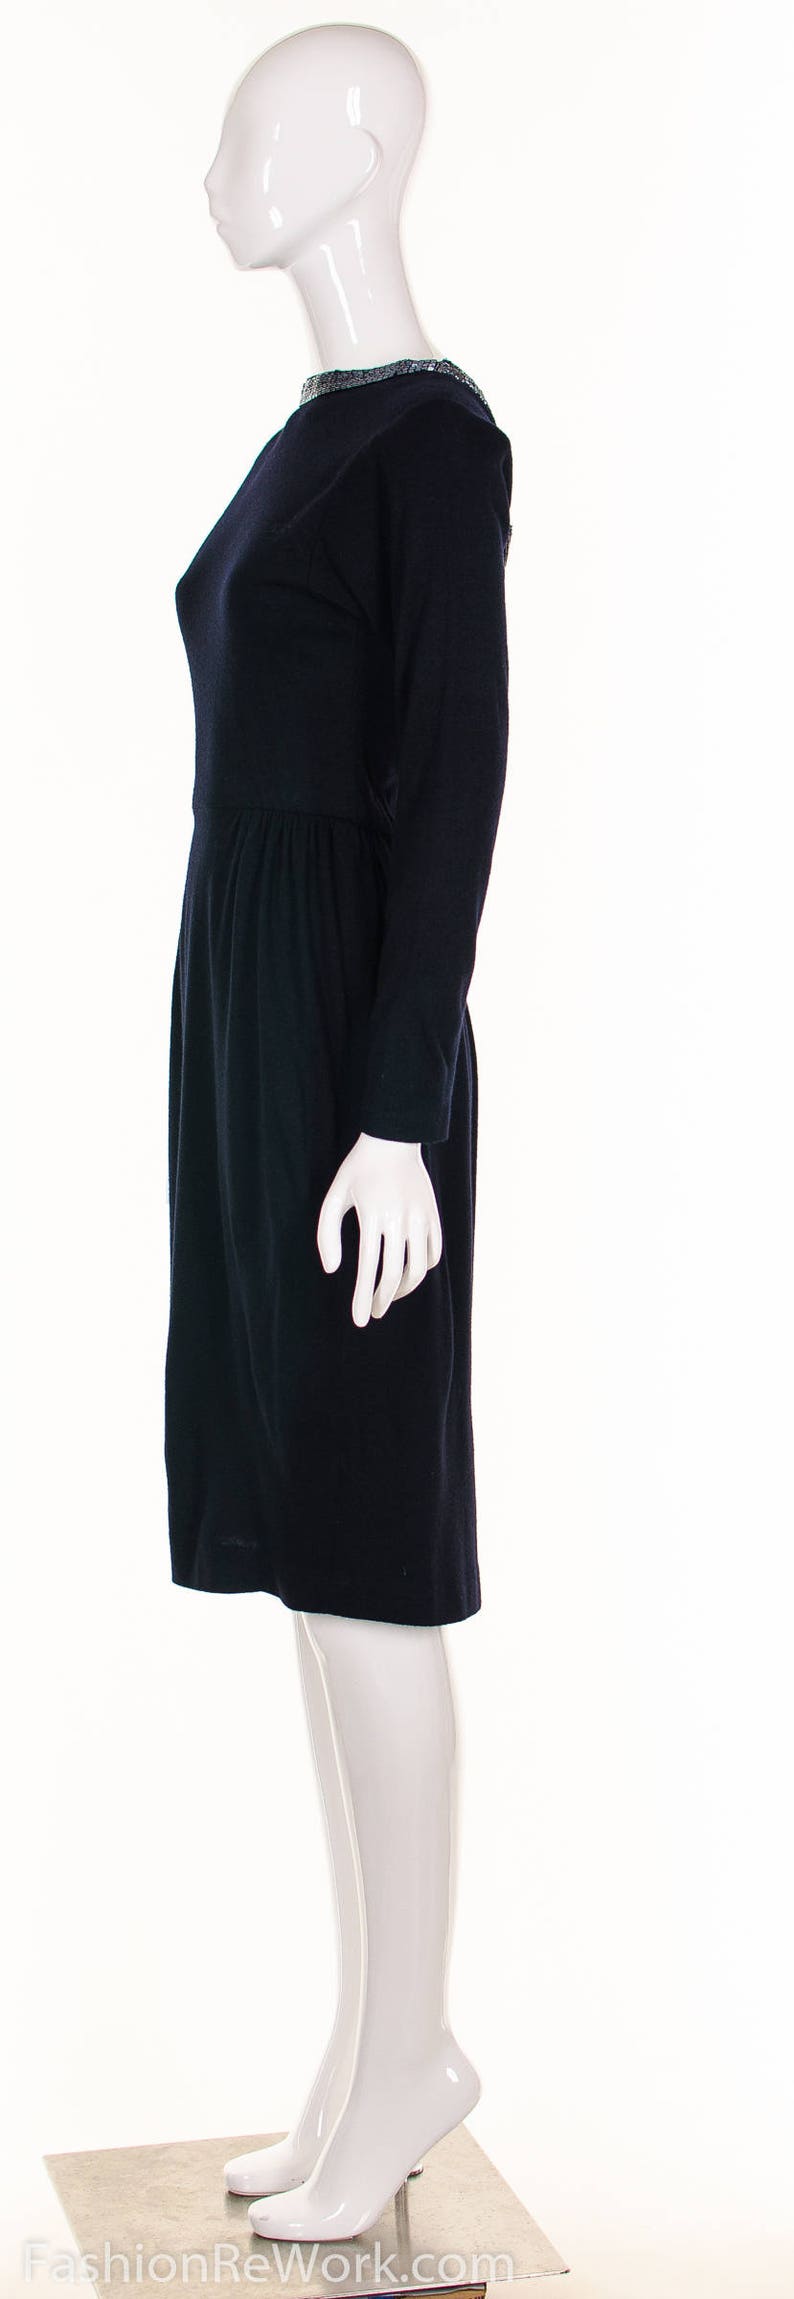 Vintage 50's Black Beaded Dress Plunging Neckline Black Wool Knit Dress Low Back Vixen Wiggle Dress Button Up Bombshell Retro Pin Up Dress S image 6